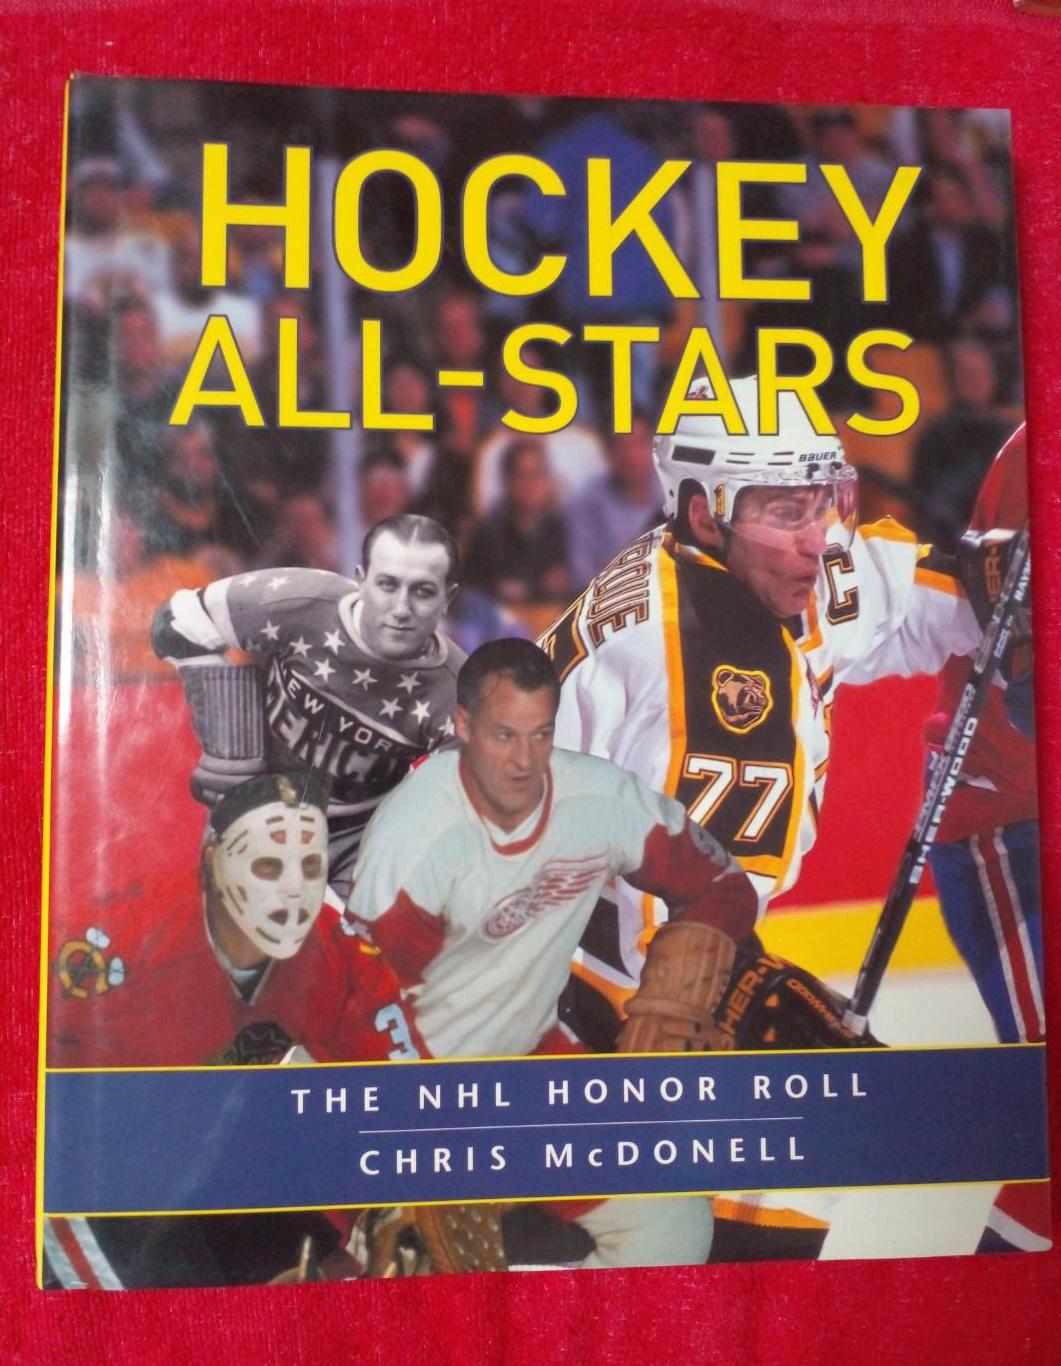 Книга - Альбом в Суперобложке HOCKEY ALL-STARS Хоккей НХЛ Канада, США